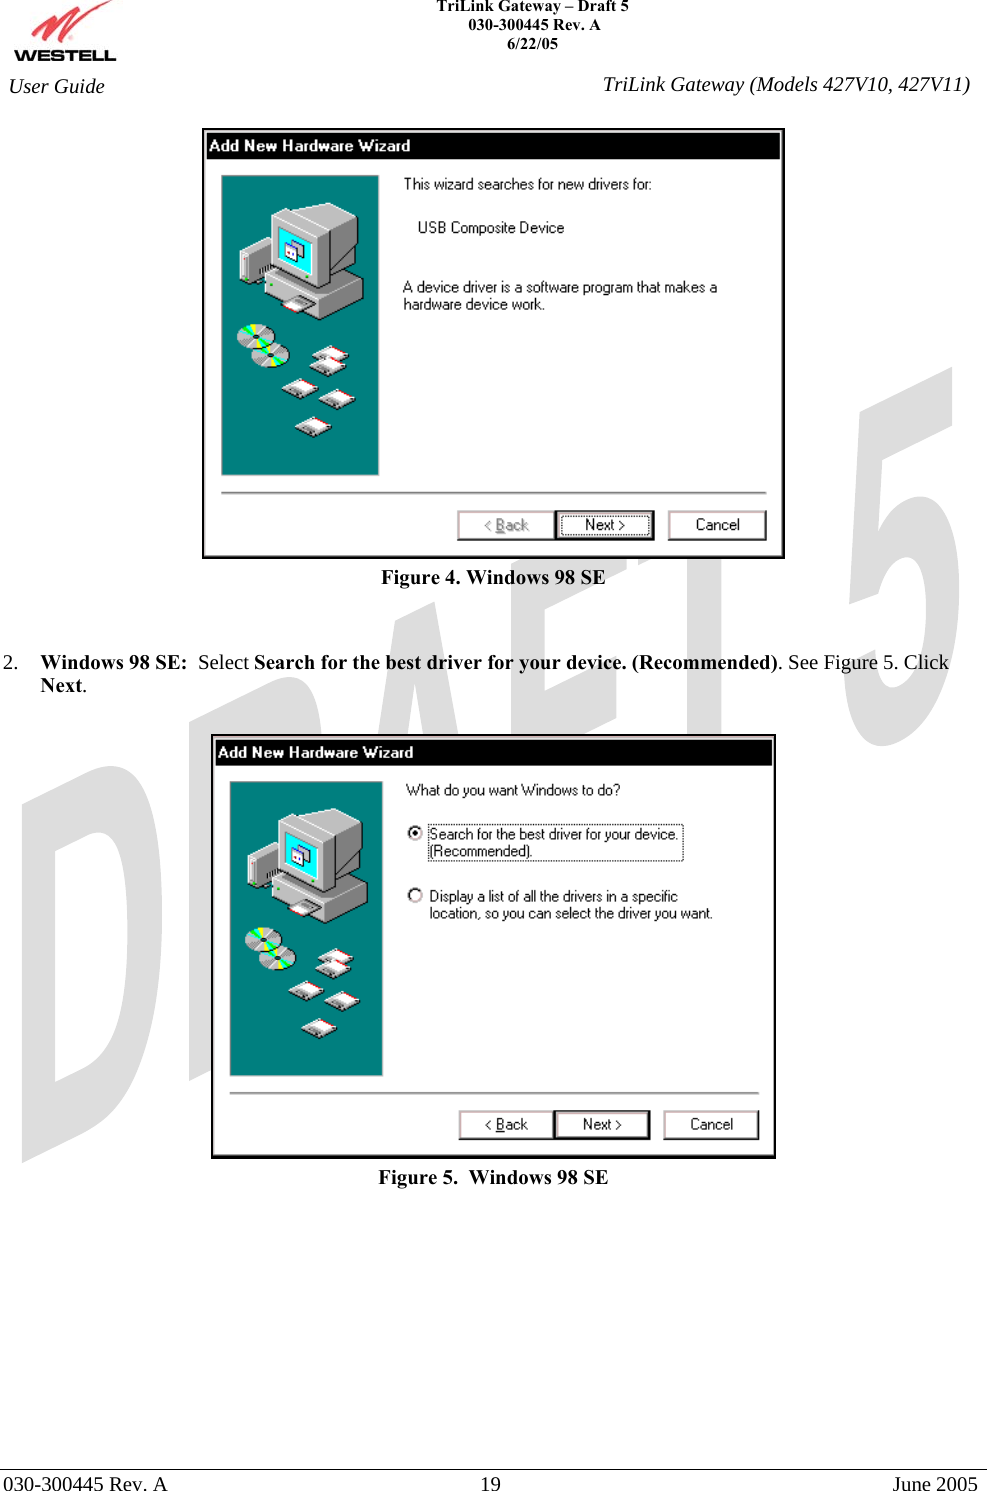    TriLink Gateway – Draft 5   030-300445 Rev. A 6/22/05   030-300445 Rev. A  19  June 2005  User Guide  TriLink Gateway (Models 427V10, 427V11) Figure 4. Windows 98 SE   2.  Windows 98 SE:  Select Search for the best driver for your device. (Recommended). See Figure 5. Click Next.     Figure 5.  Windows 98 SE             